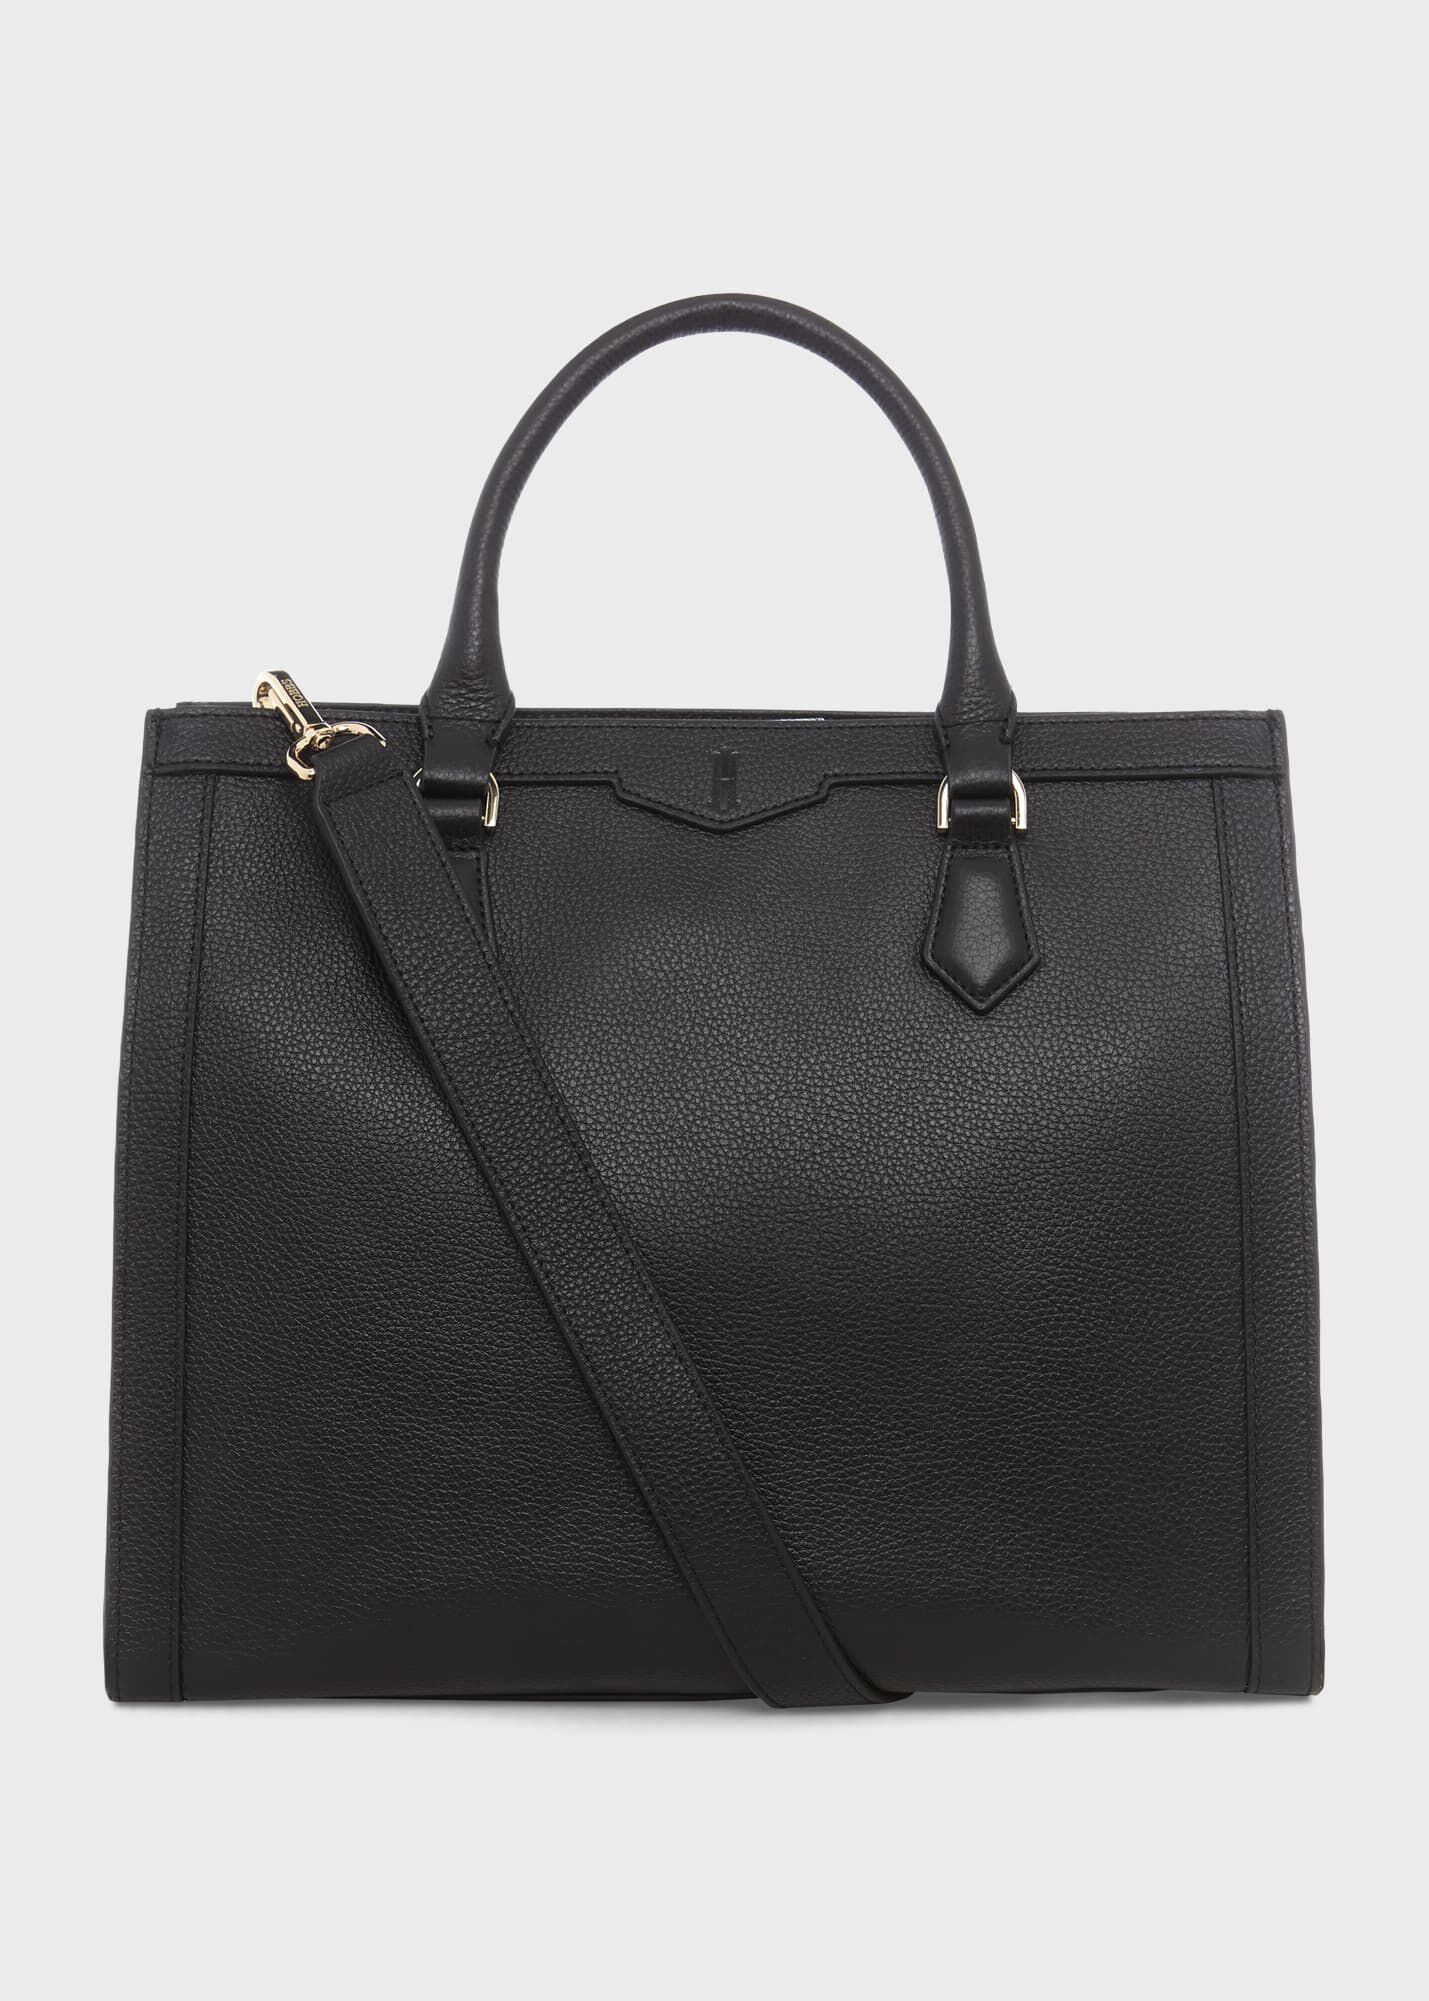 Handbags | Women's Bags & Clutches | Hobbs London |